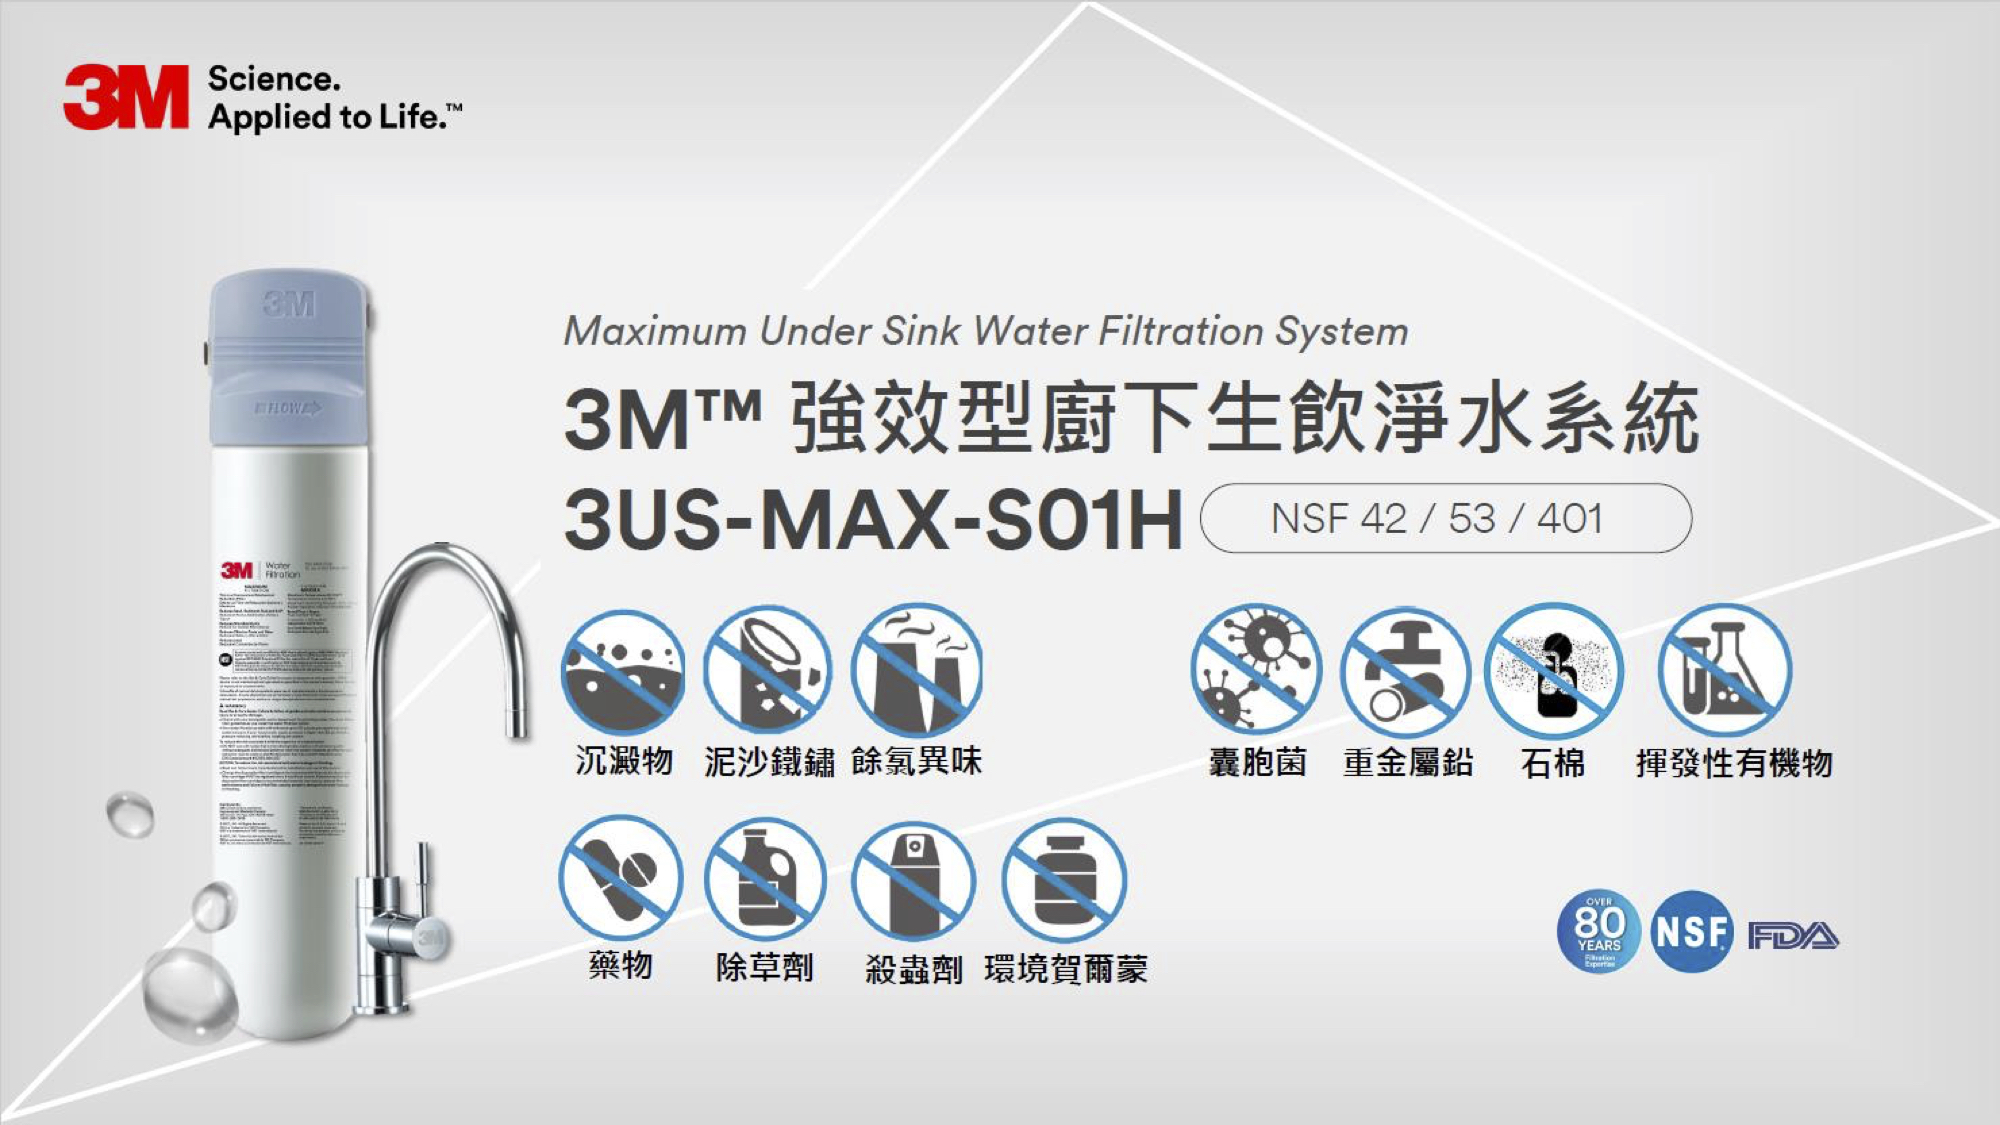 3US-MAX-S01H強效型廚下生飲淨水系統+SGP165廚下型軟水系統